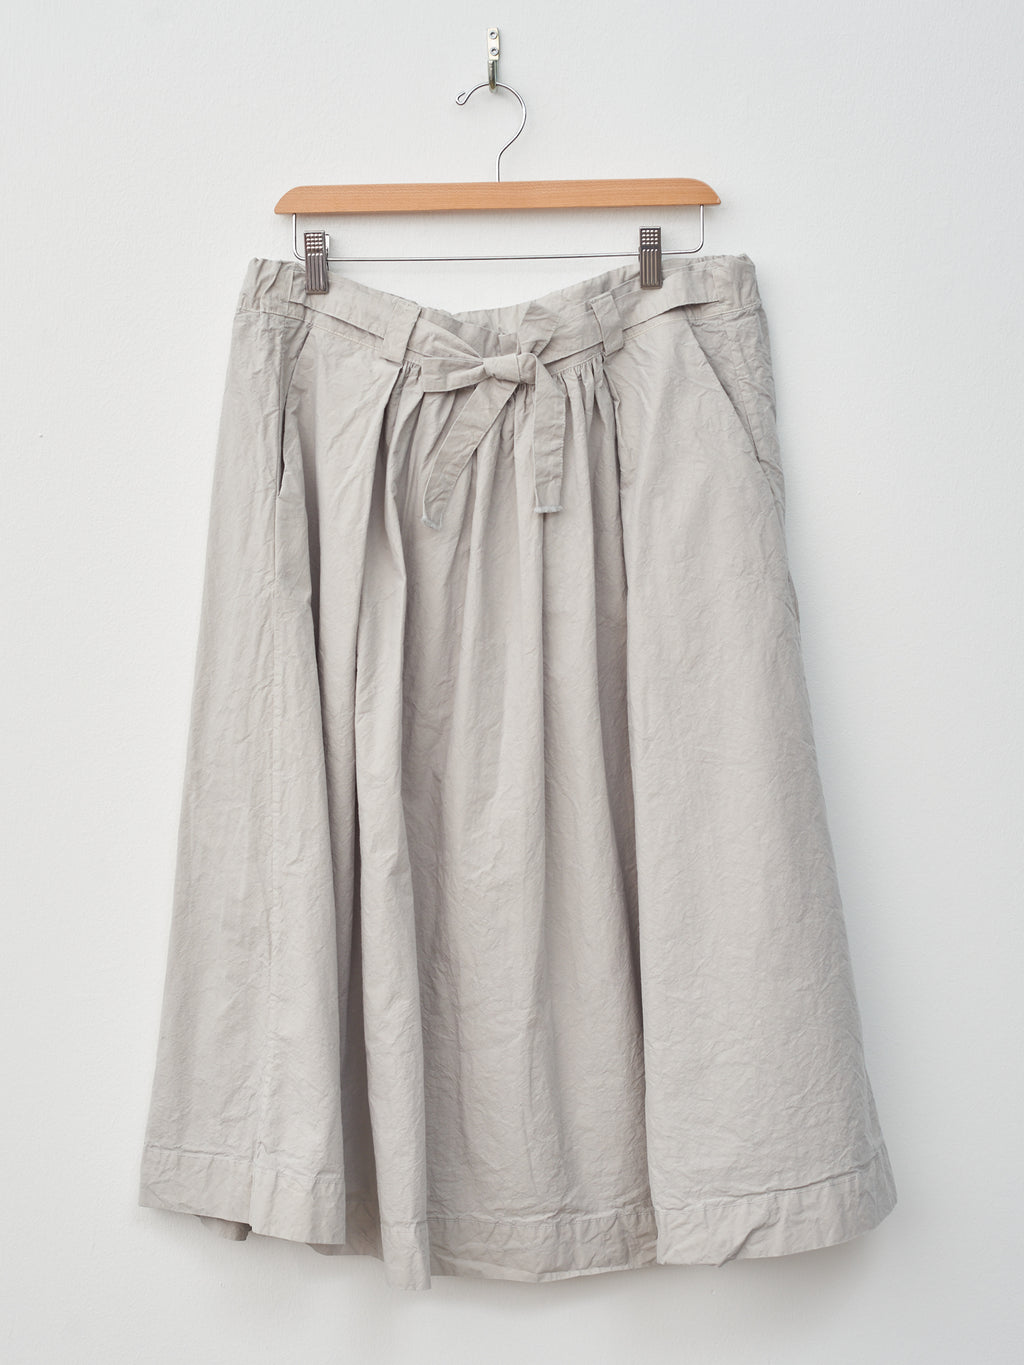 Namu Shop - Veritecoeur Daily Skirt - Smoke Gray